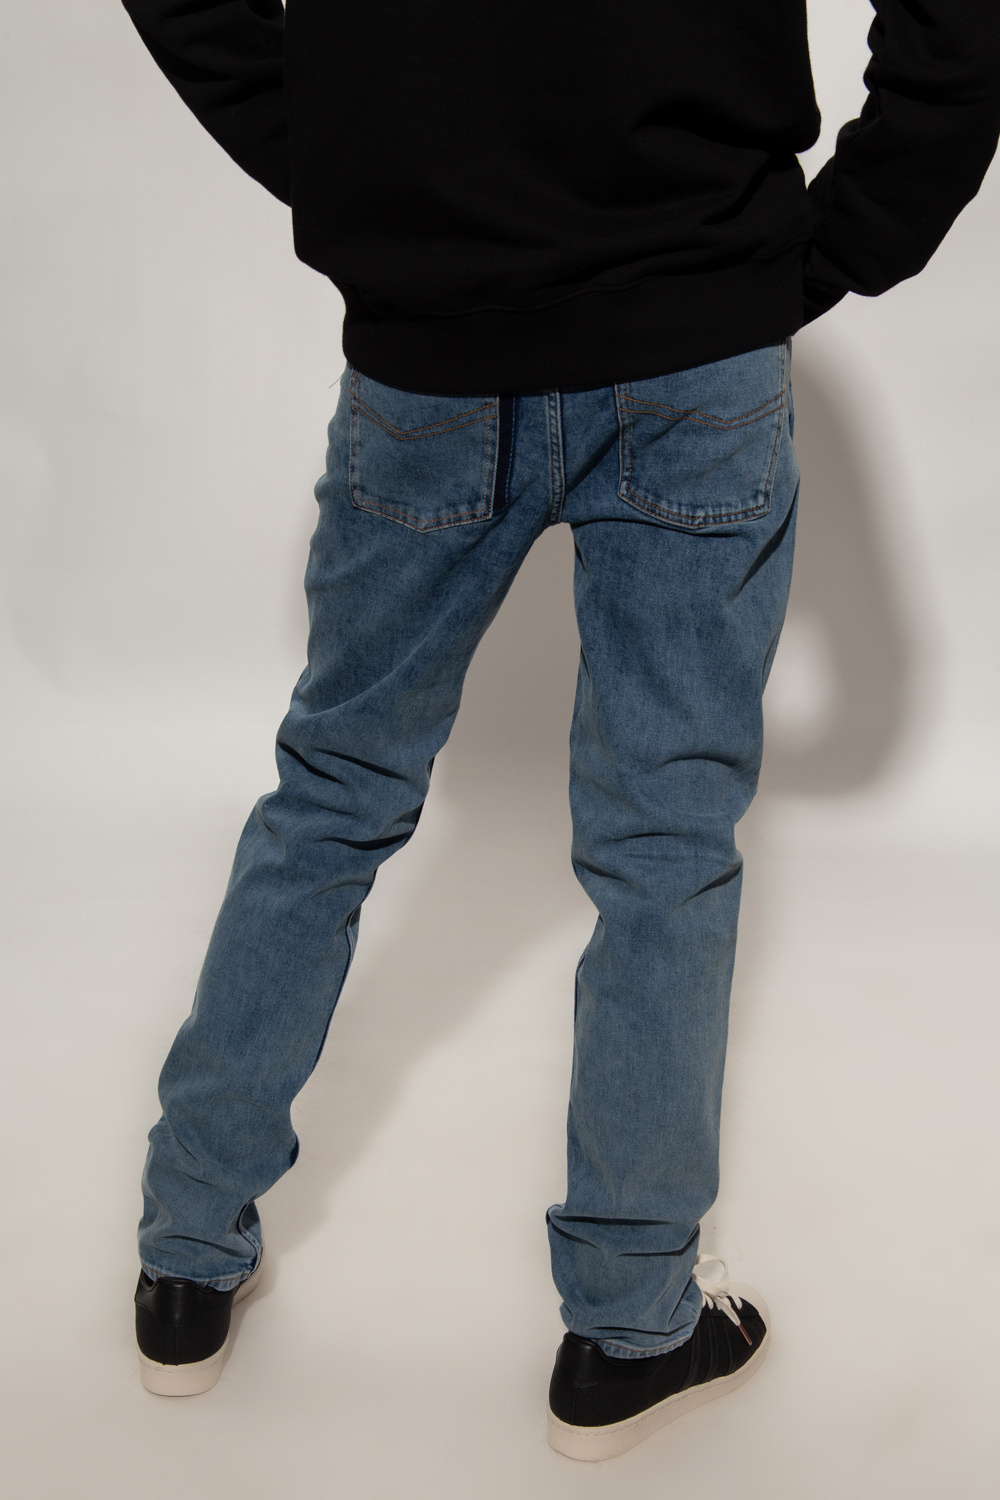 Puma Legging Ultraform ‘Steeve’ jeans